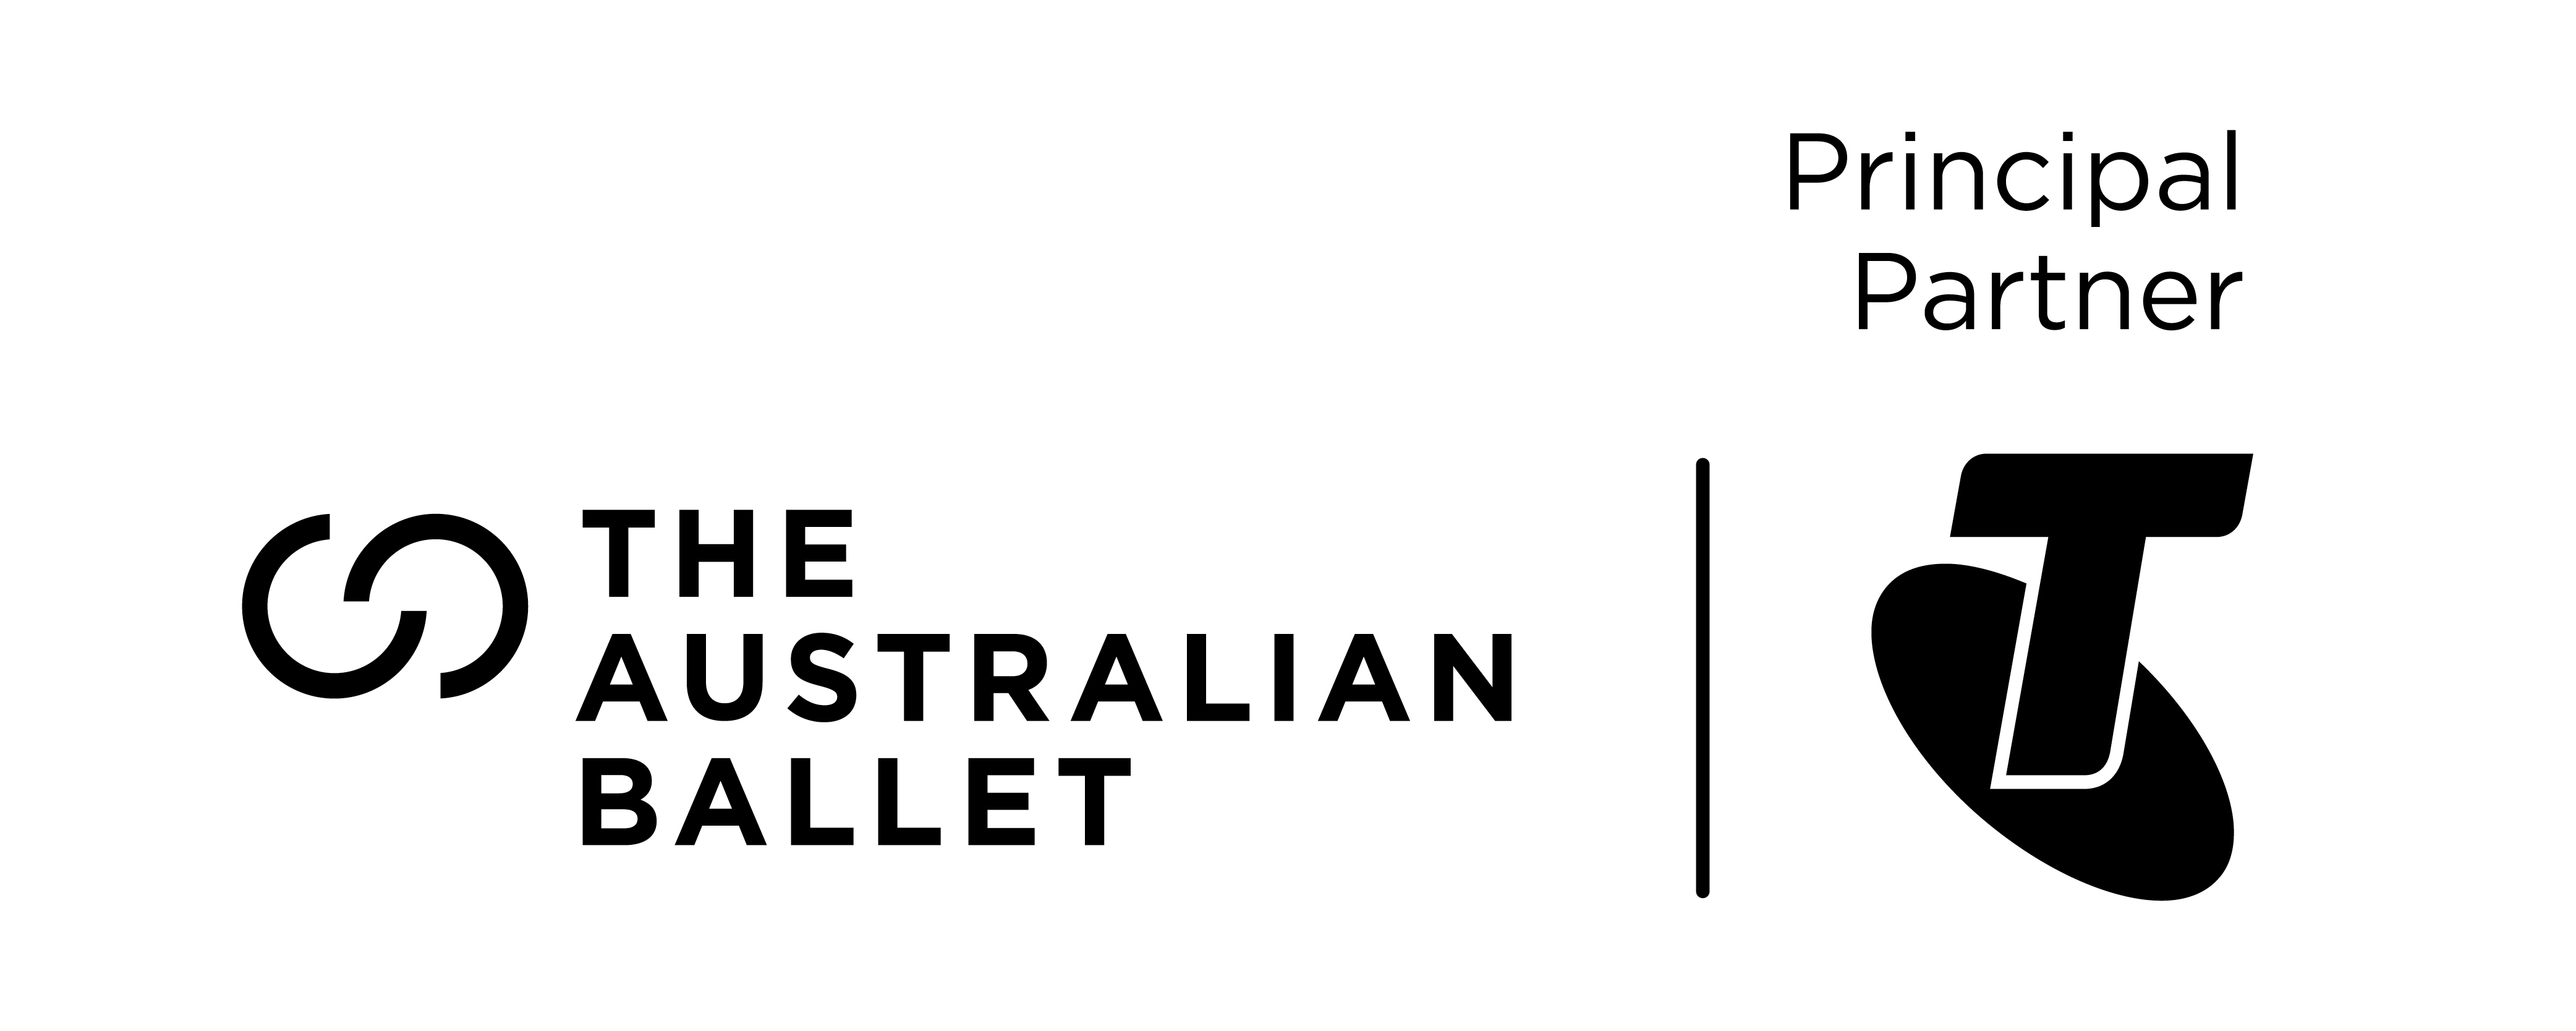 Telstra- The Australian Ballet's principal partner 